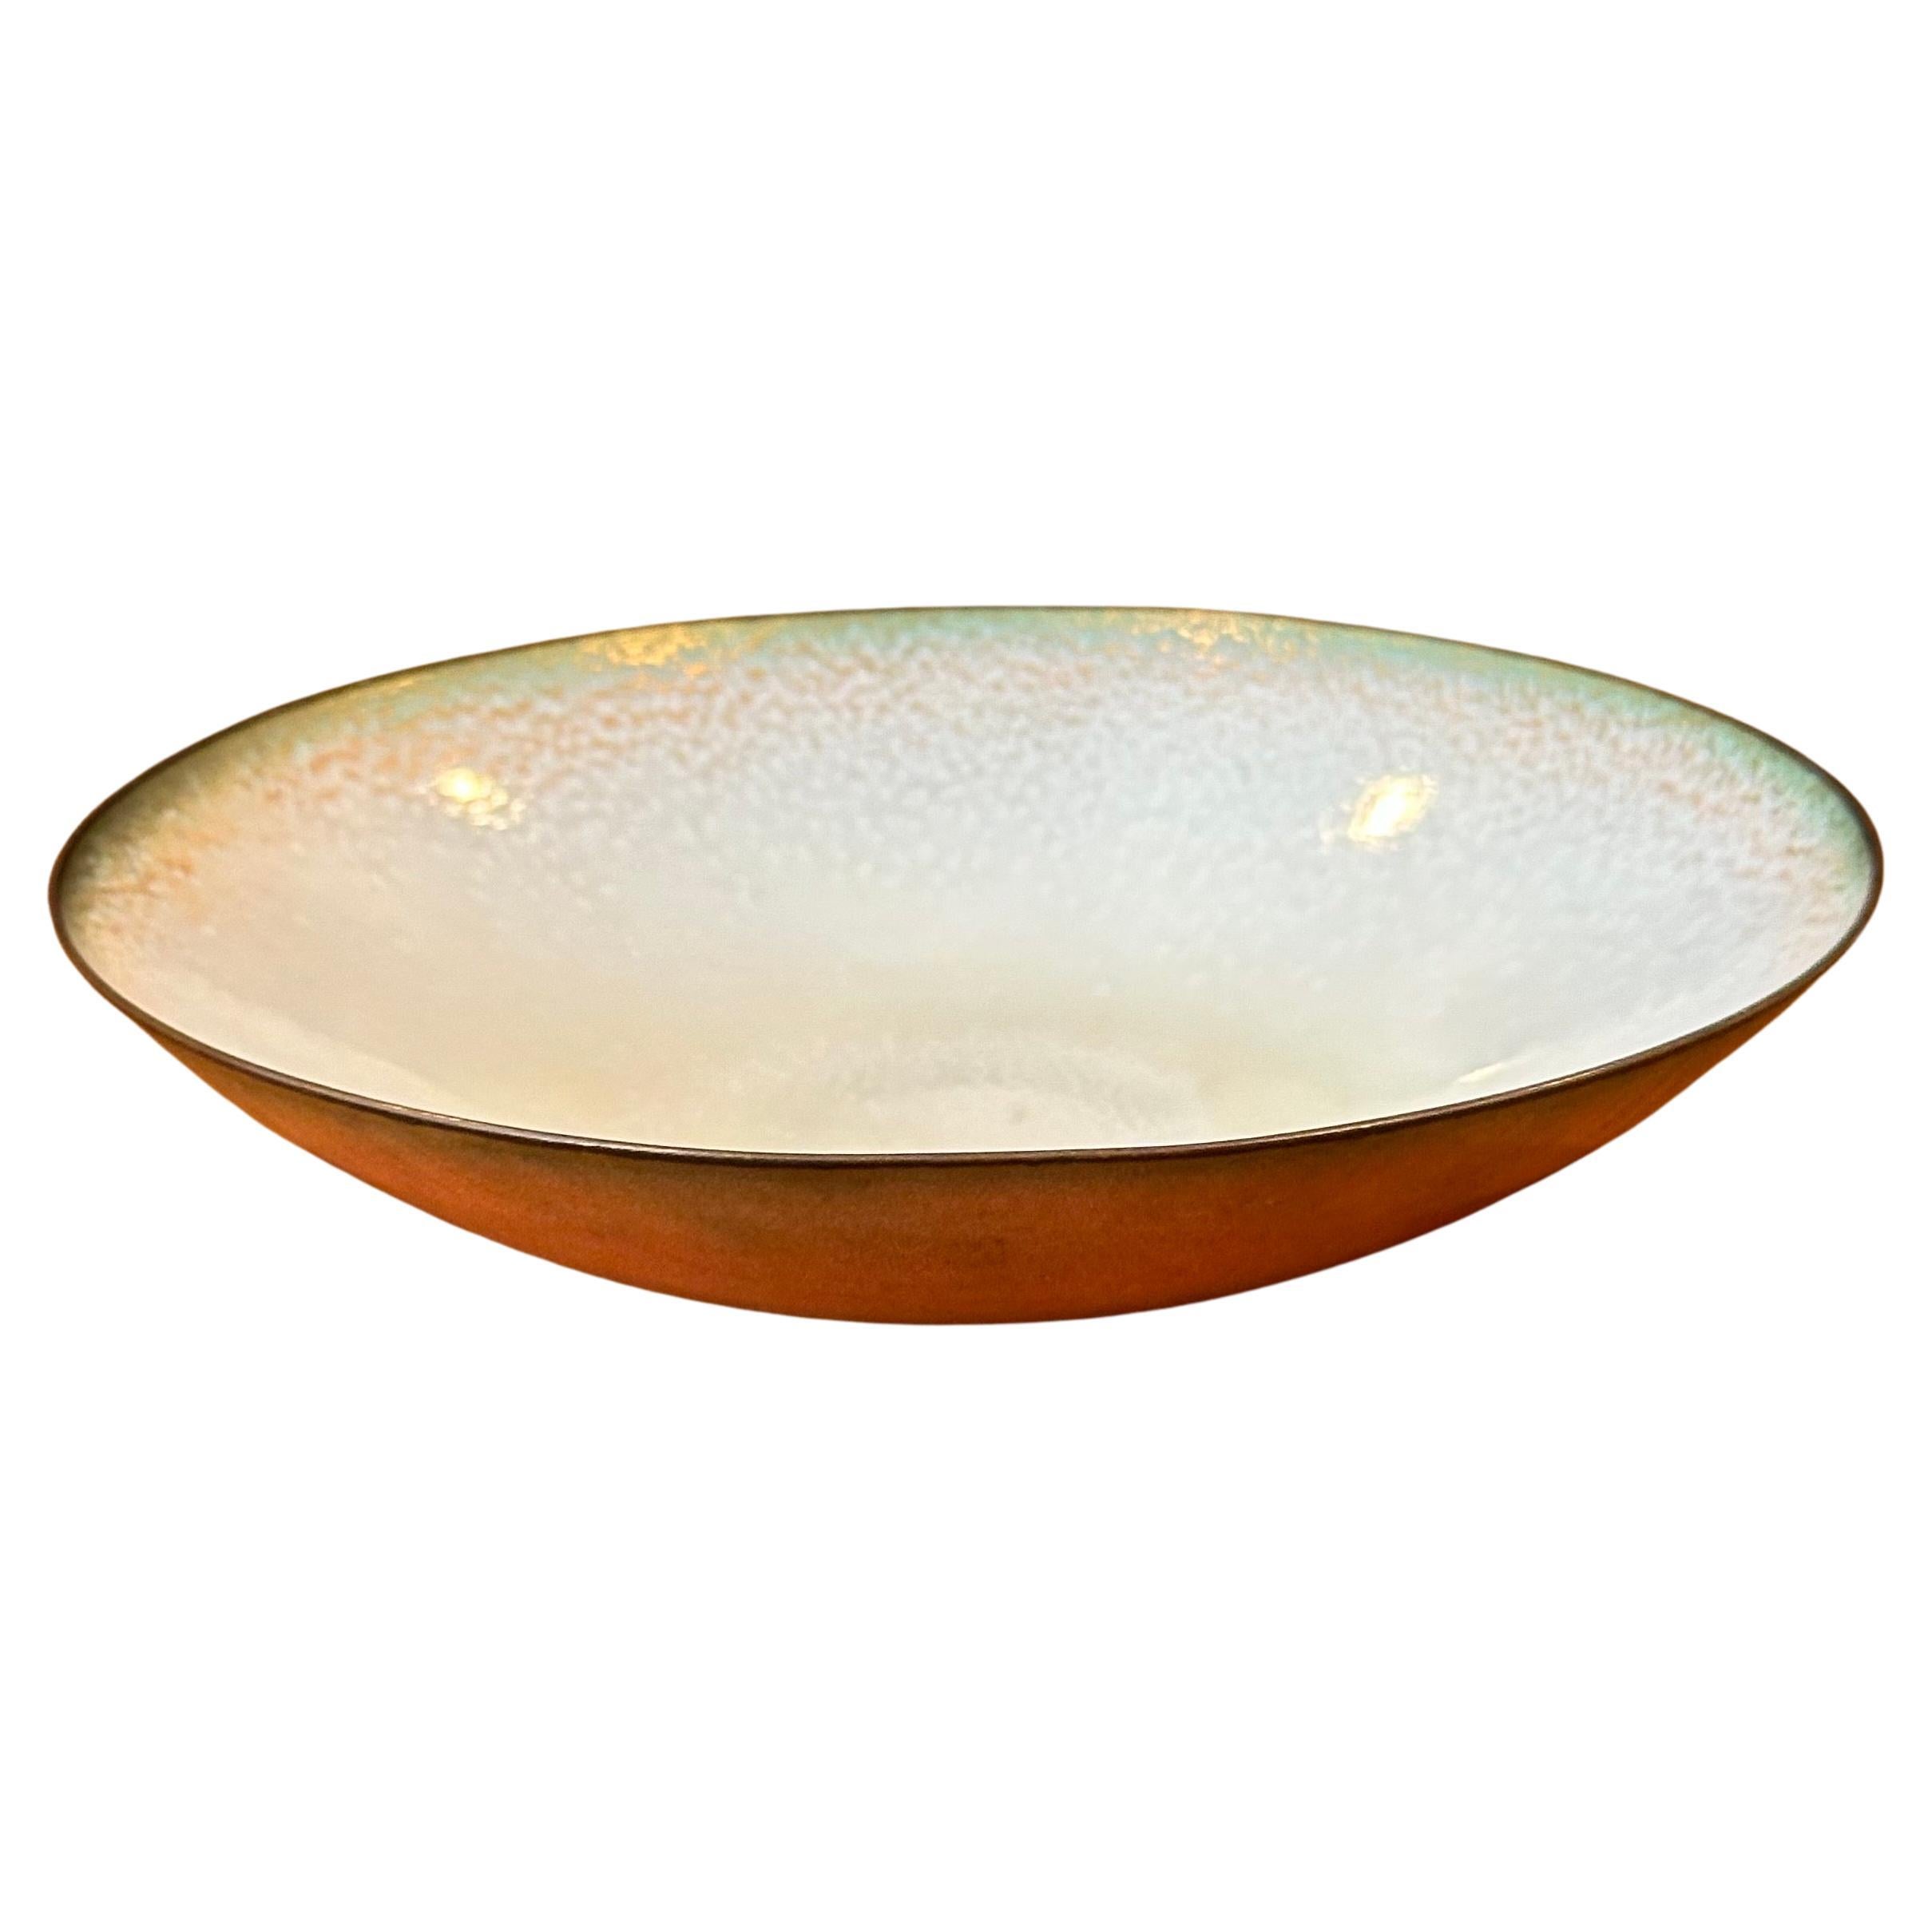 California Design Enamel on Copper Small Dish by Leon Statham For Sale